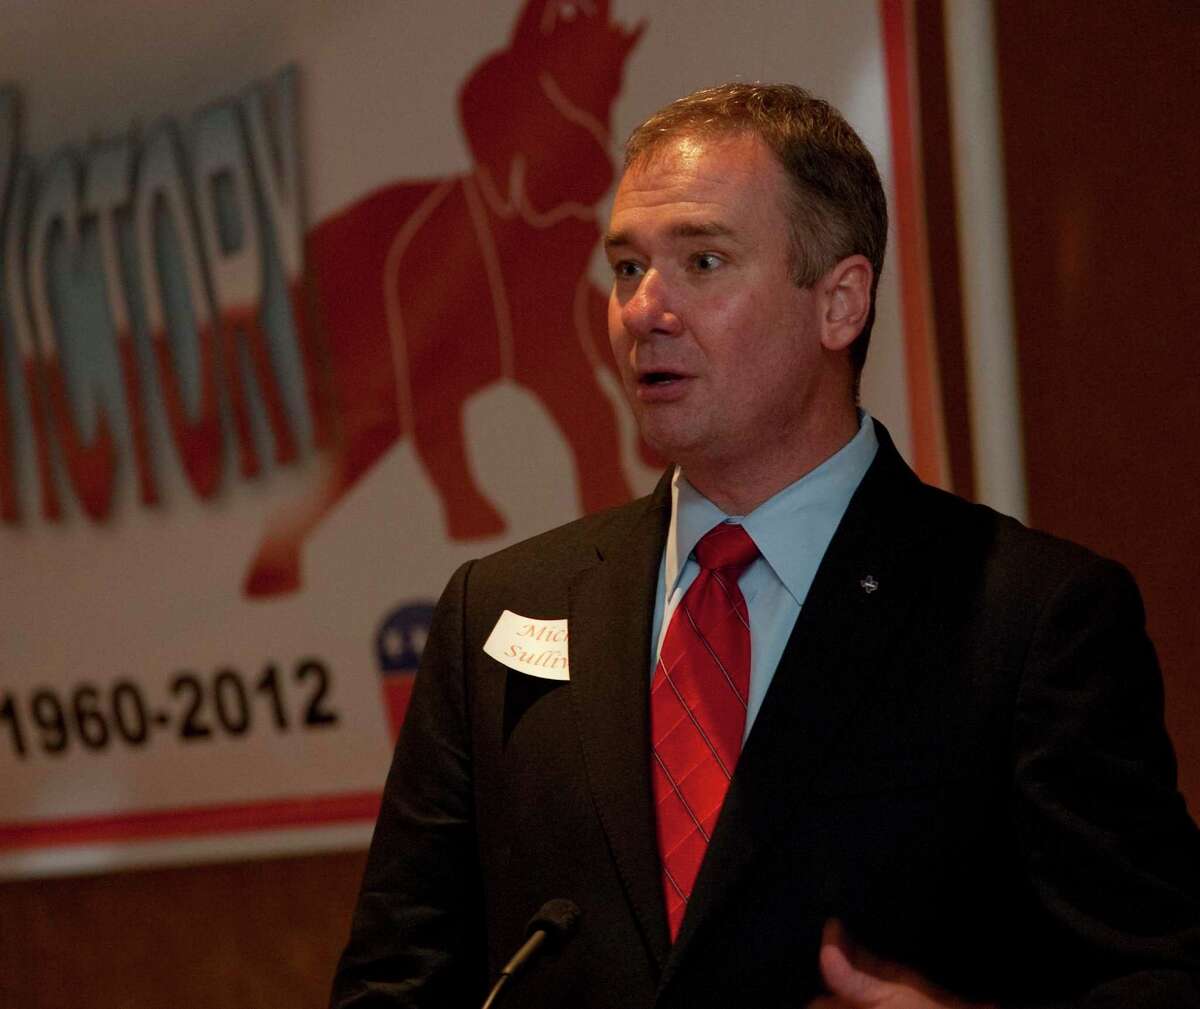 Michael Quinn Sullivan speaks to the Midland County Republican Women organization in July 2014.